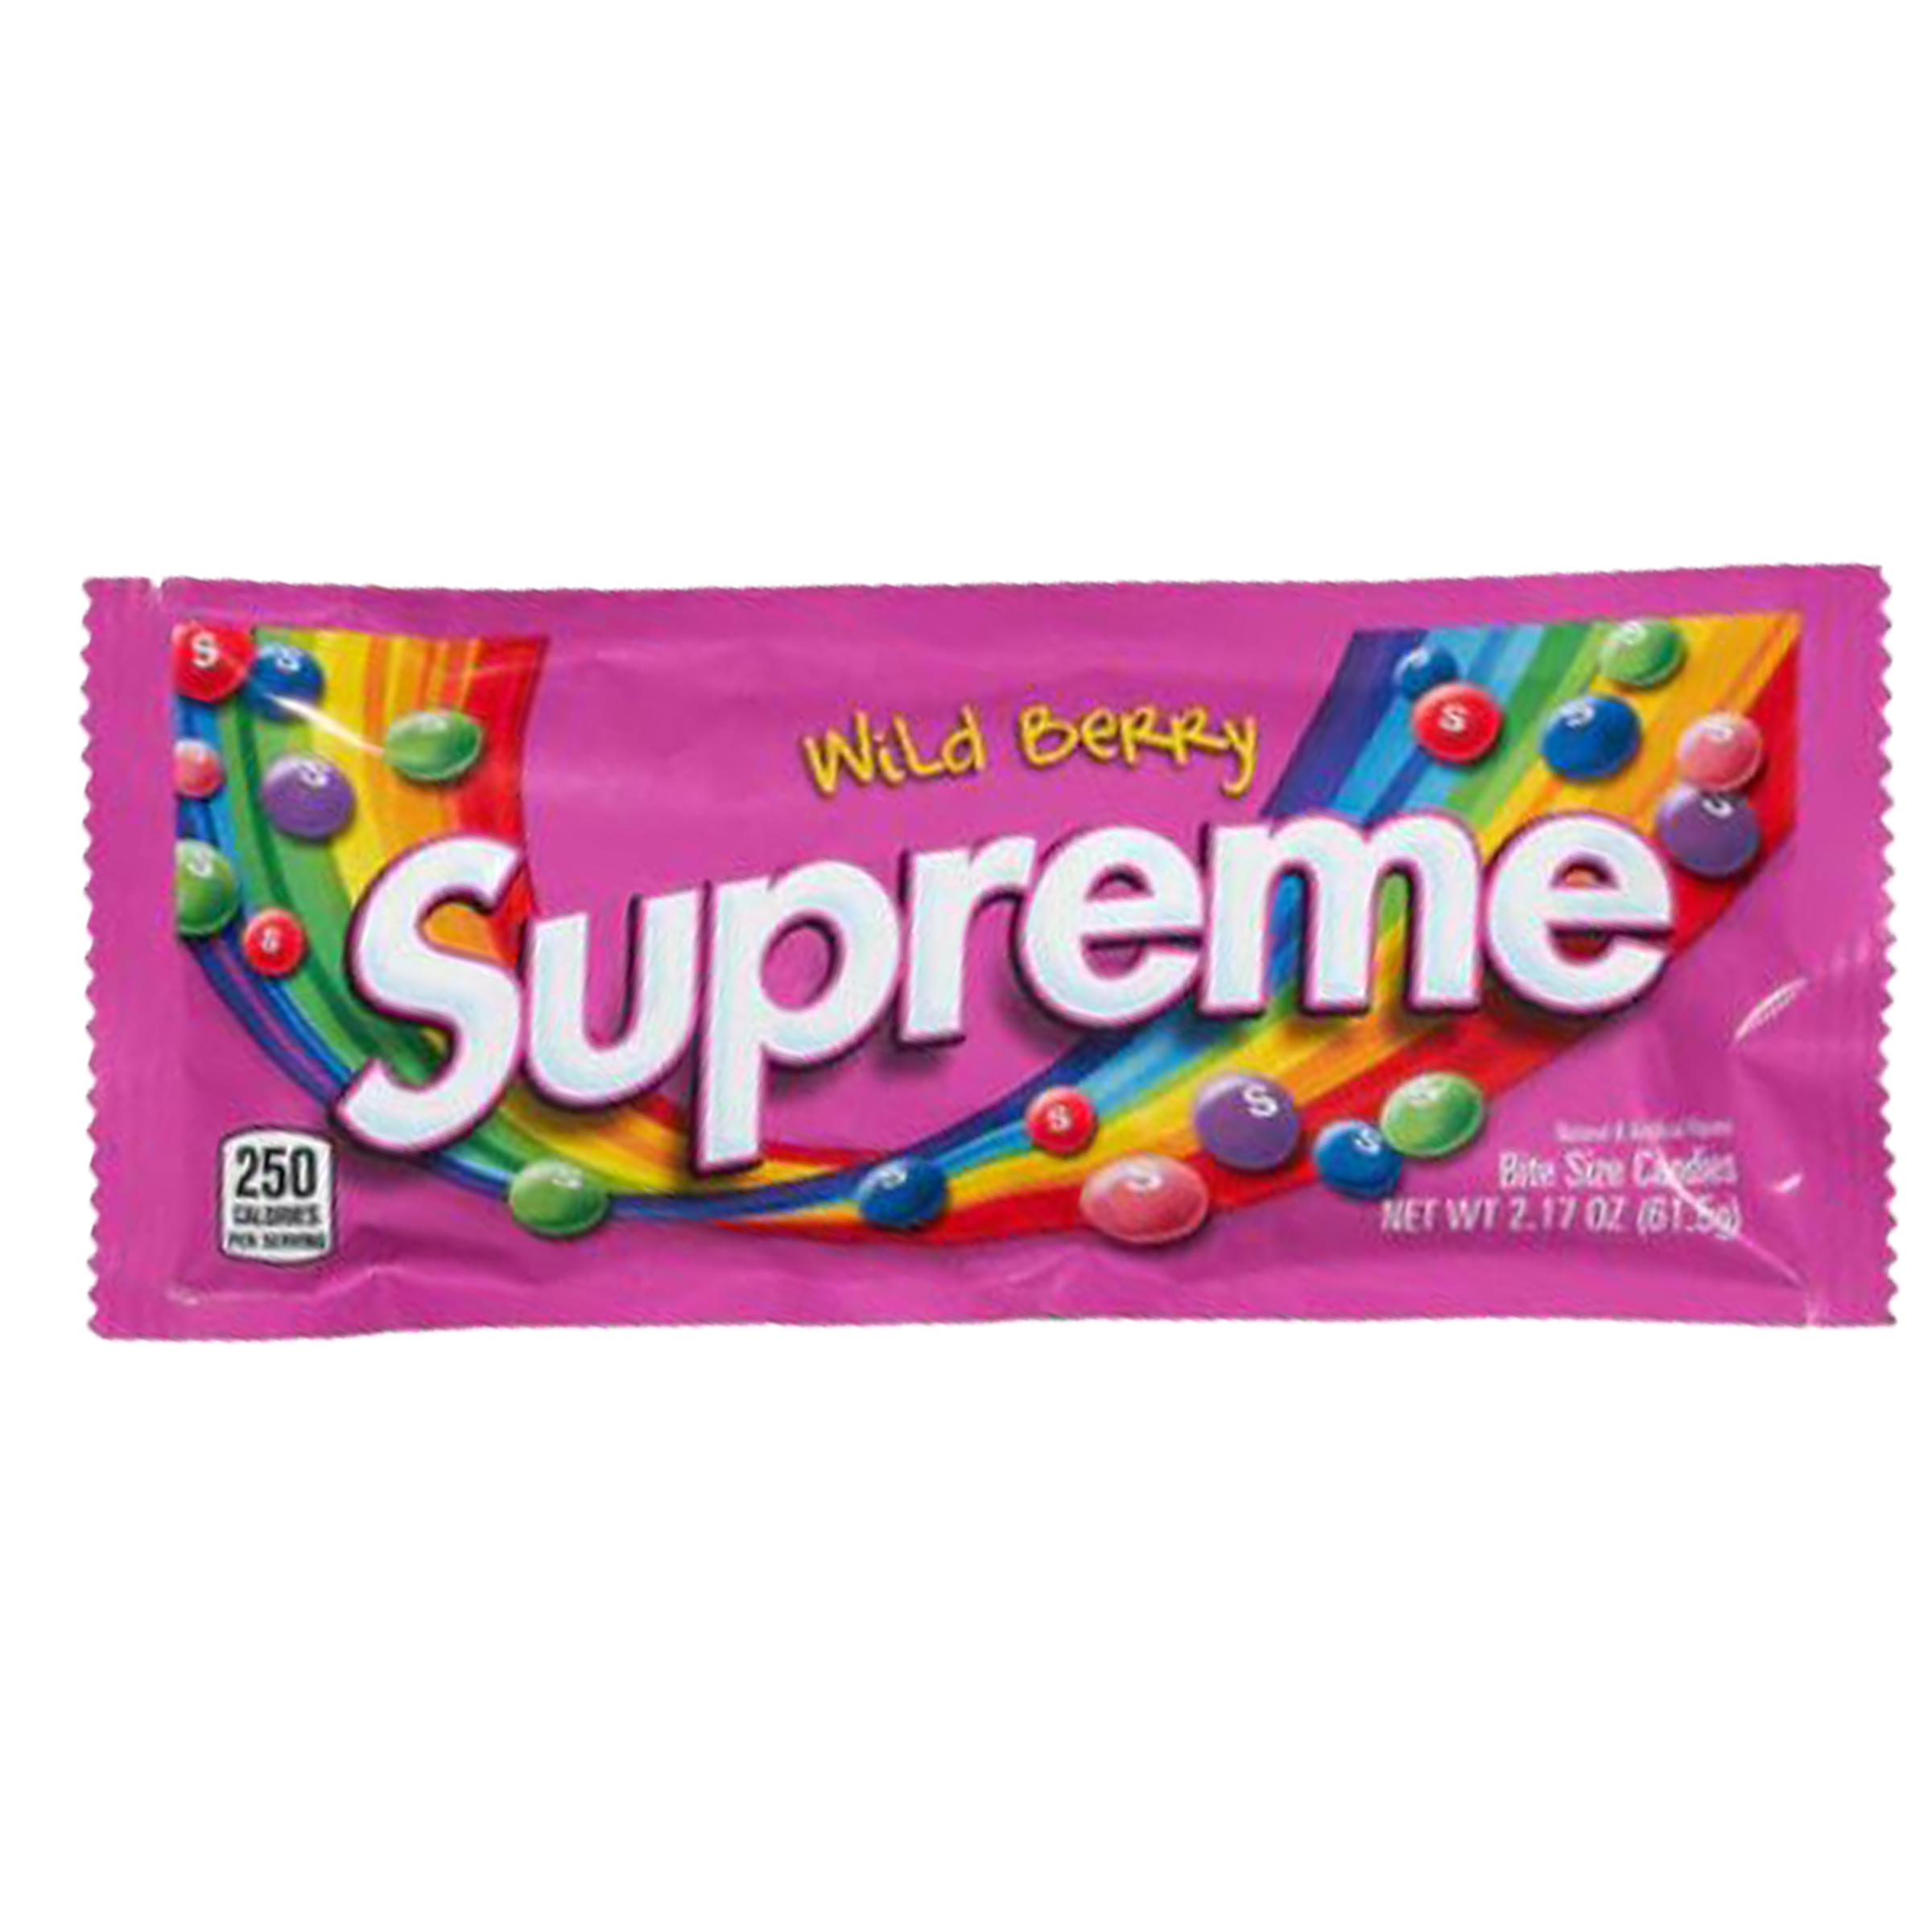 Supreme Skittles - Wild Berry